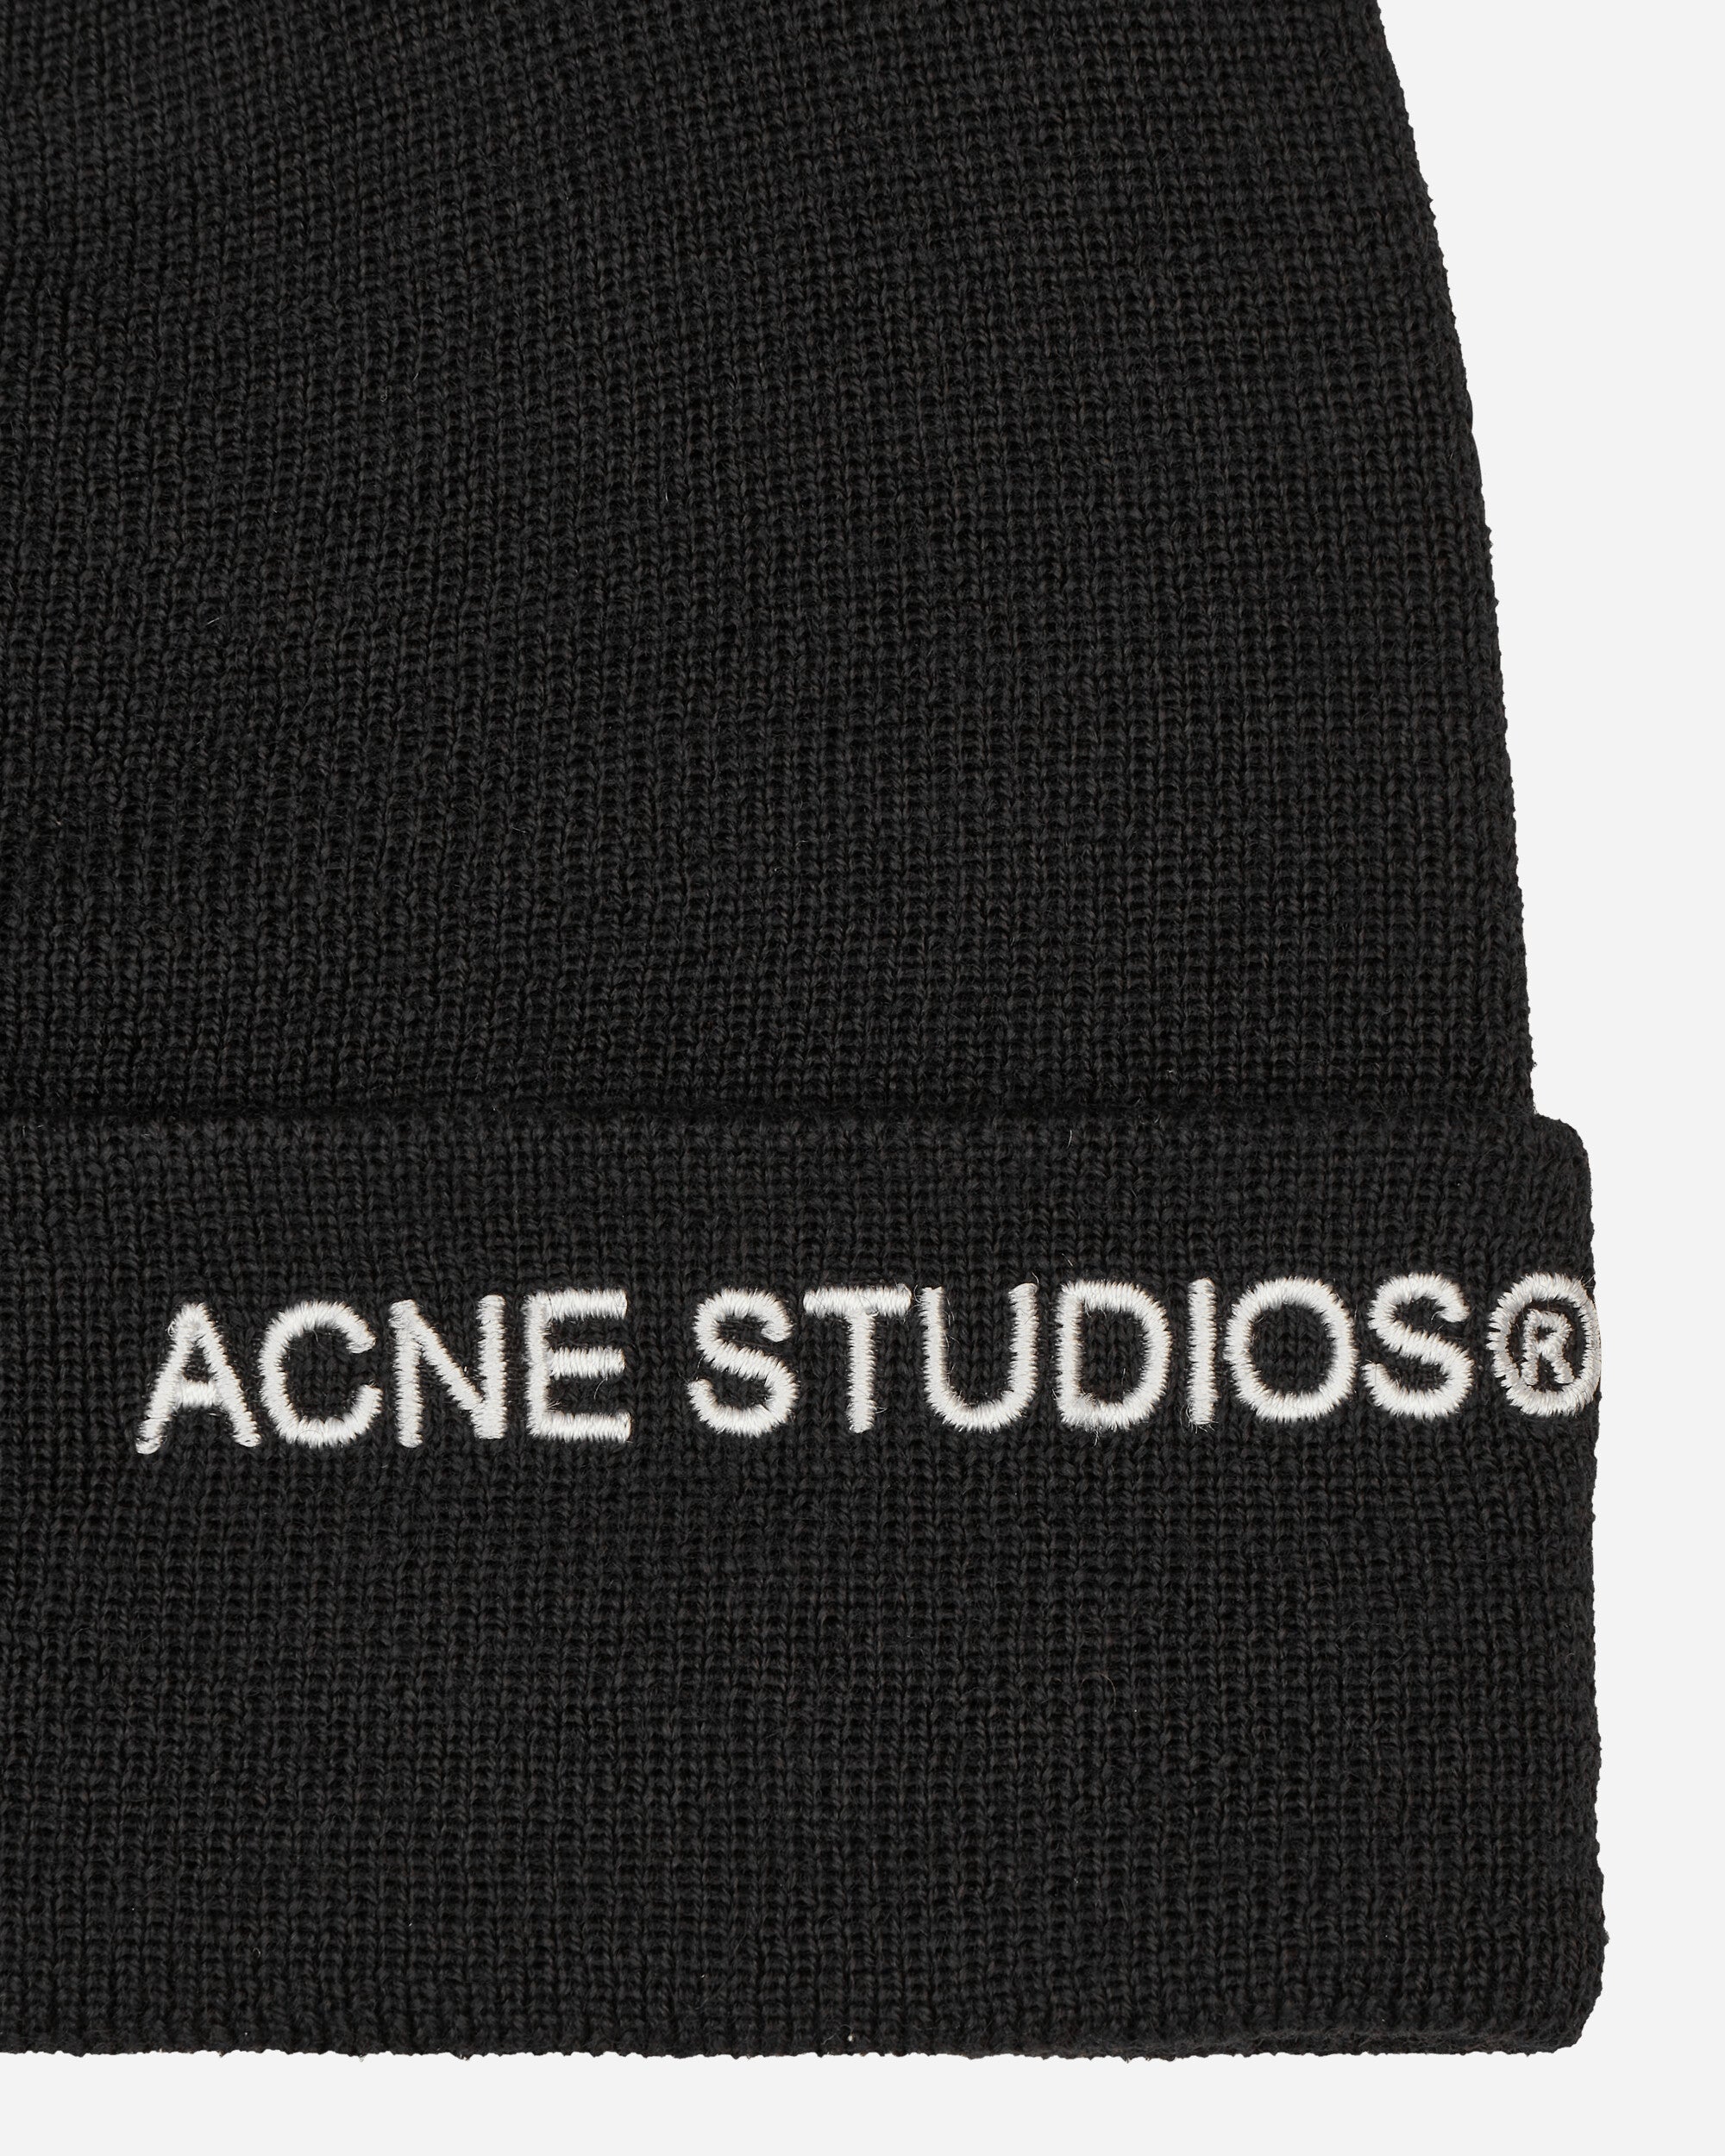 Acne Studios Beanie Black Hats Beanies C40334- 900